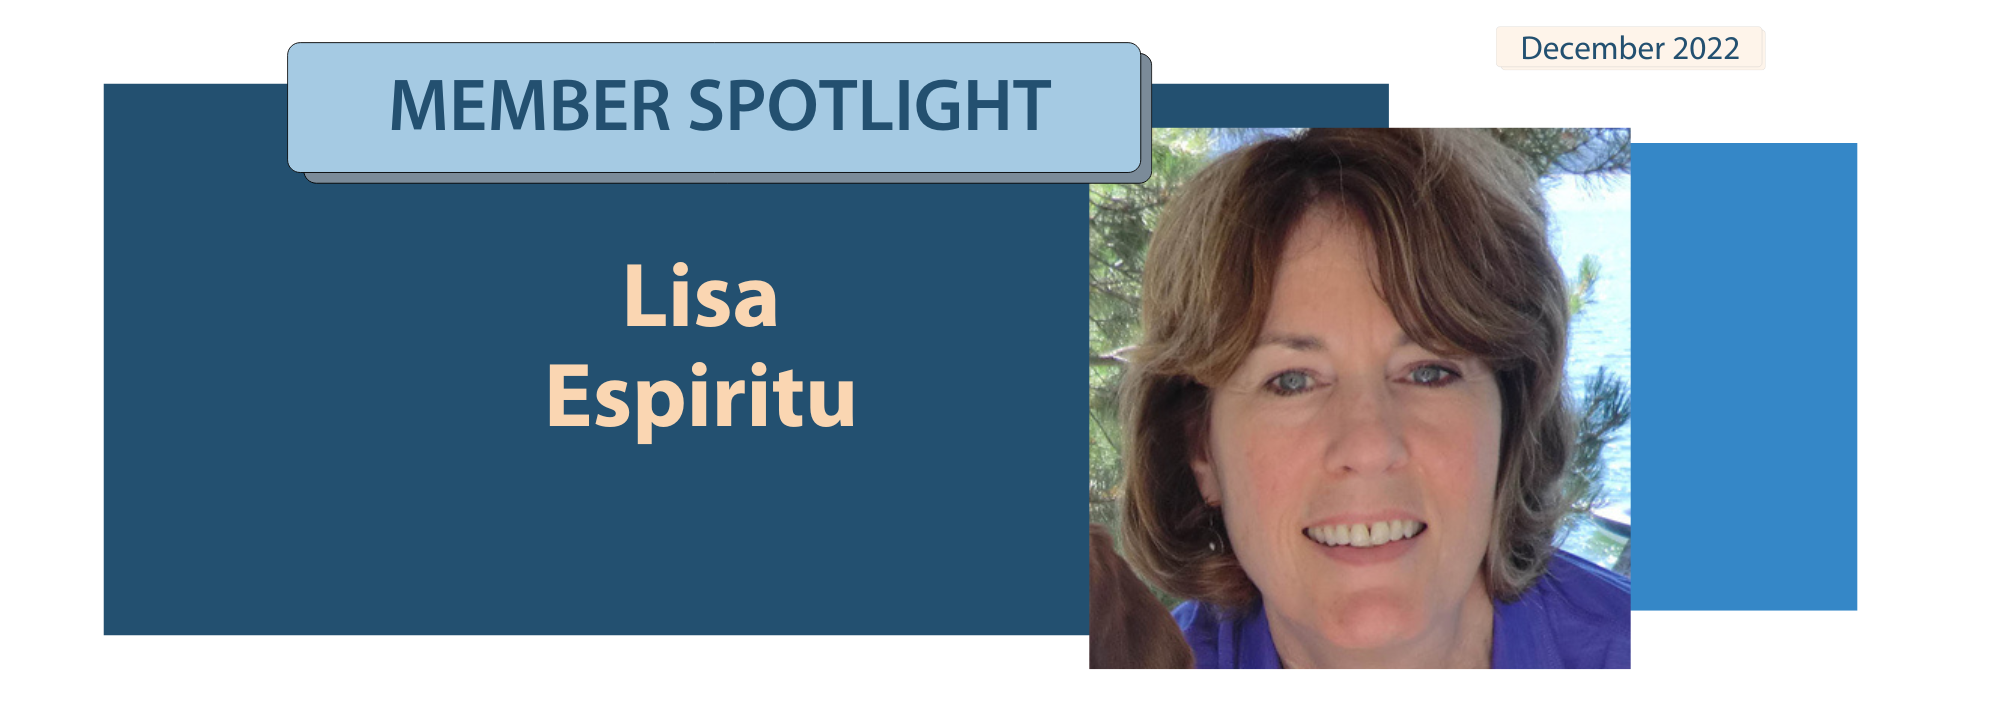 Member Spotlight Lisa Espiritu